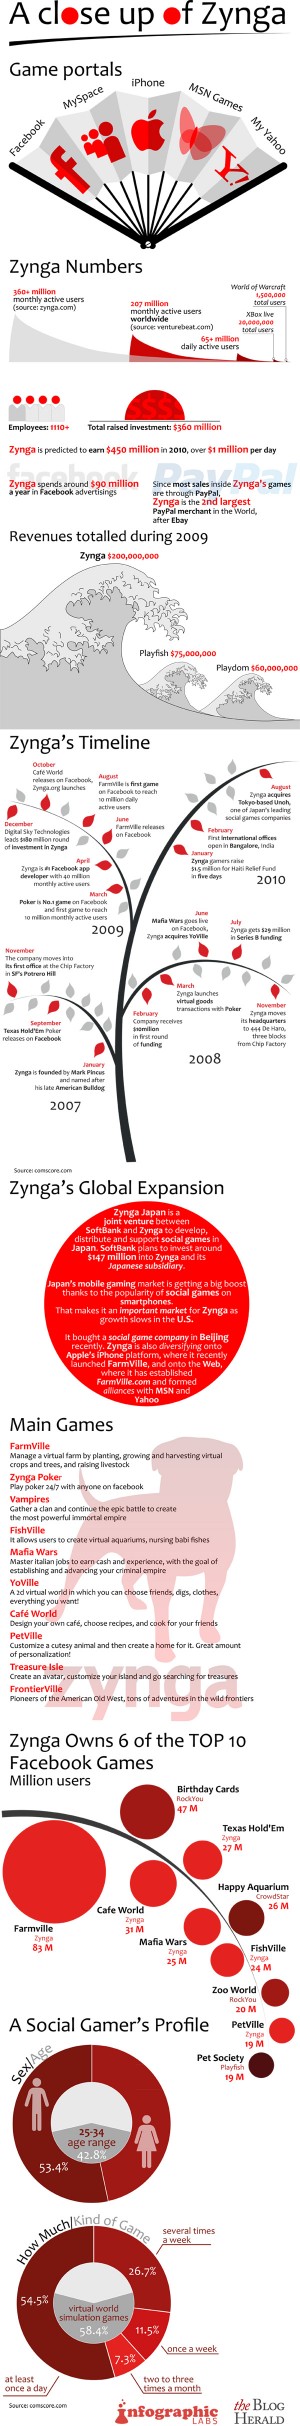 infographic-zynga-statistics